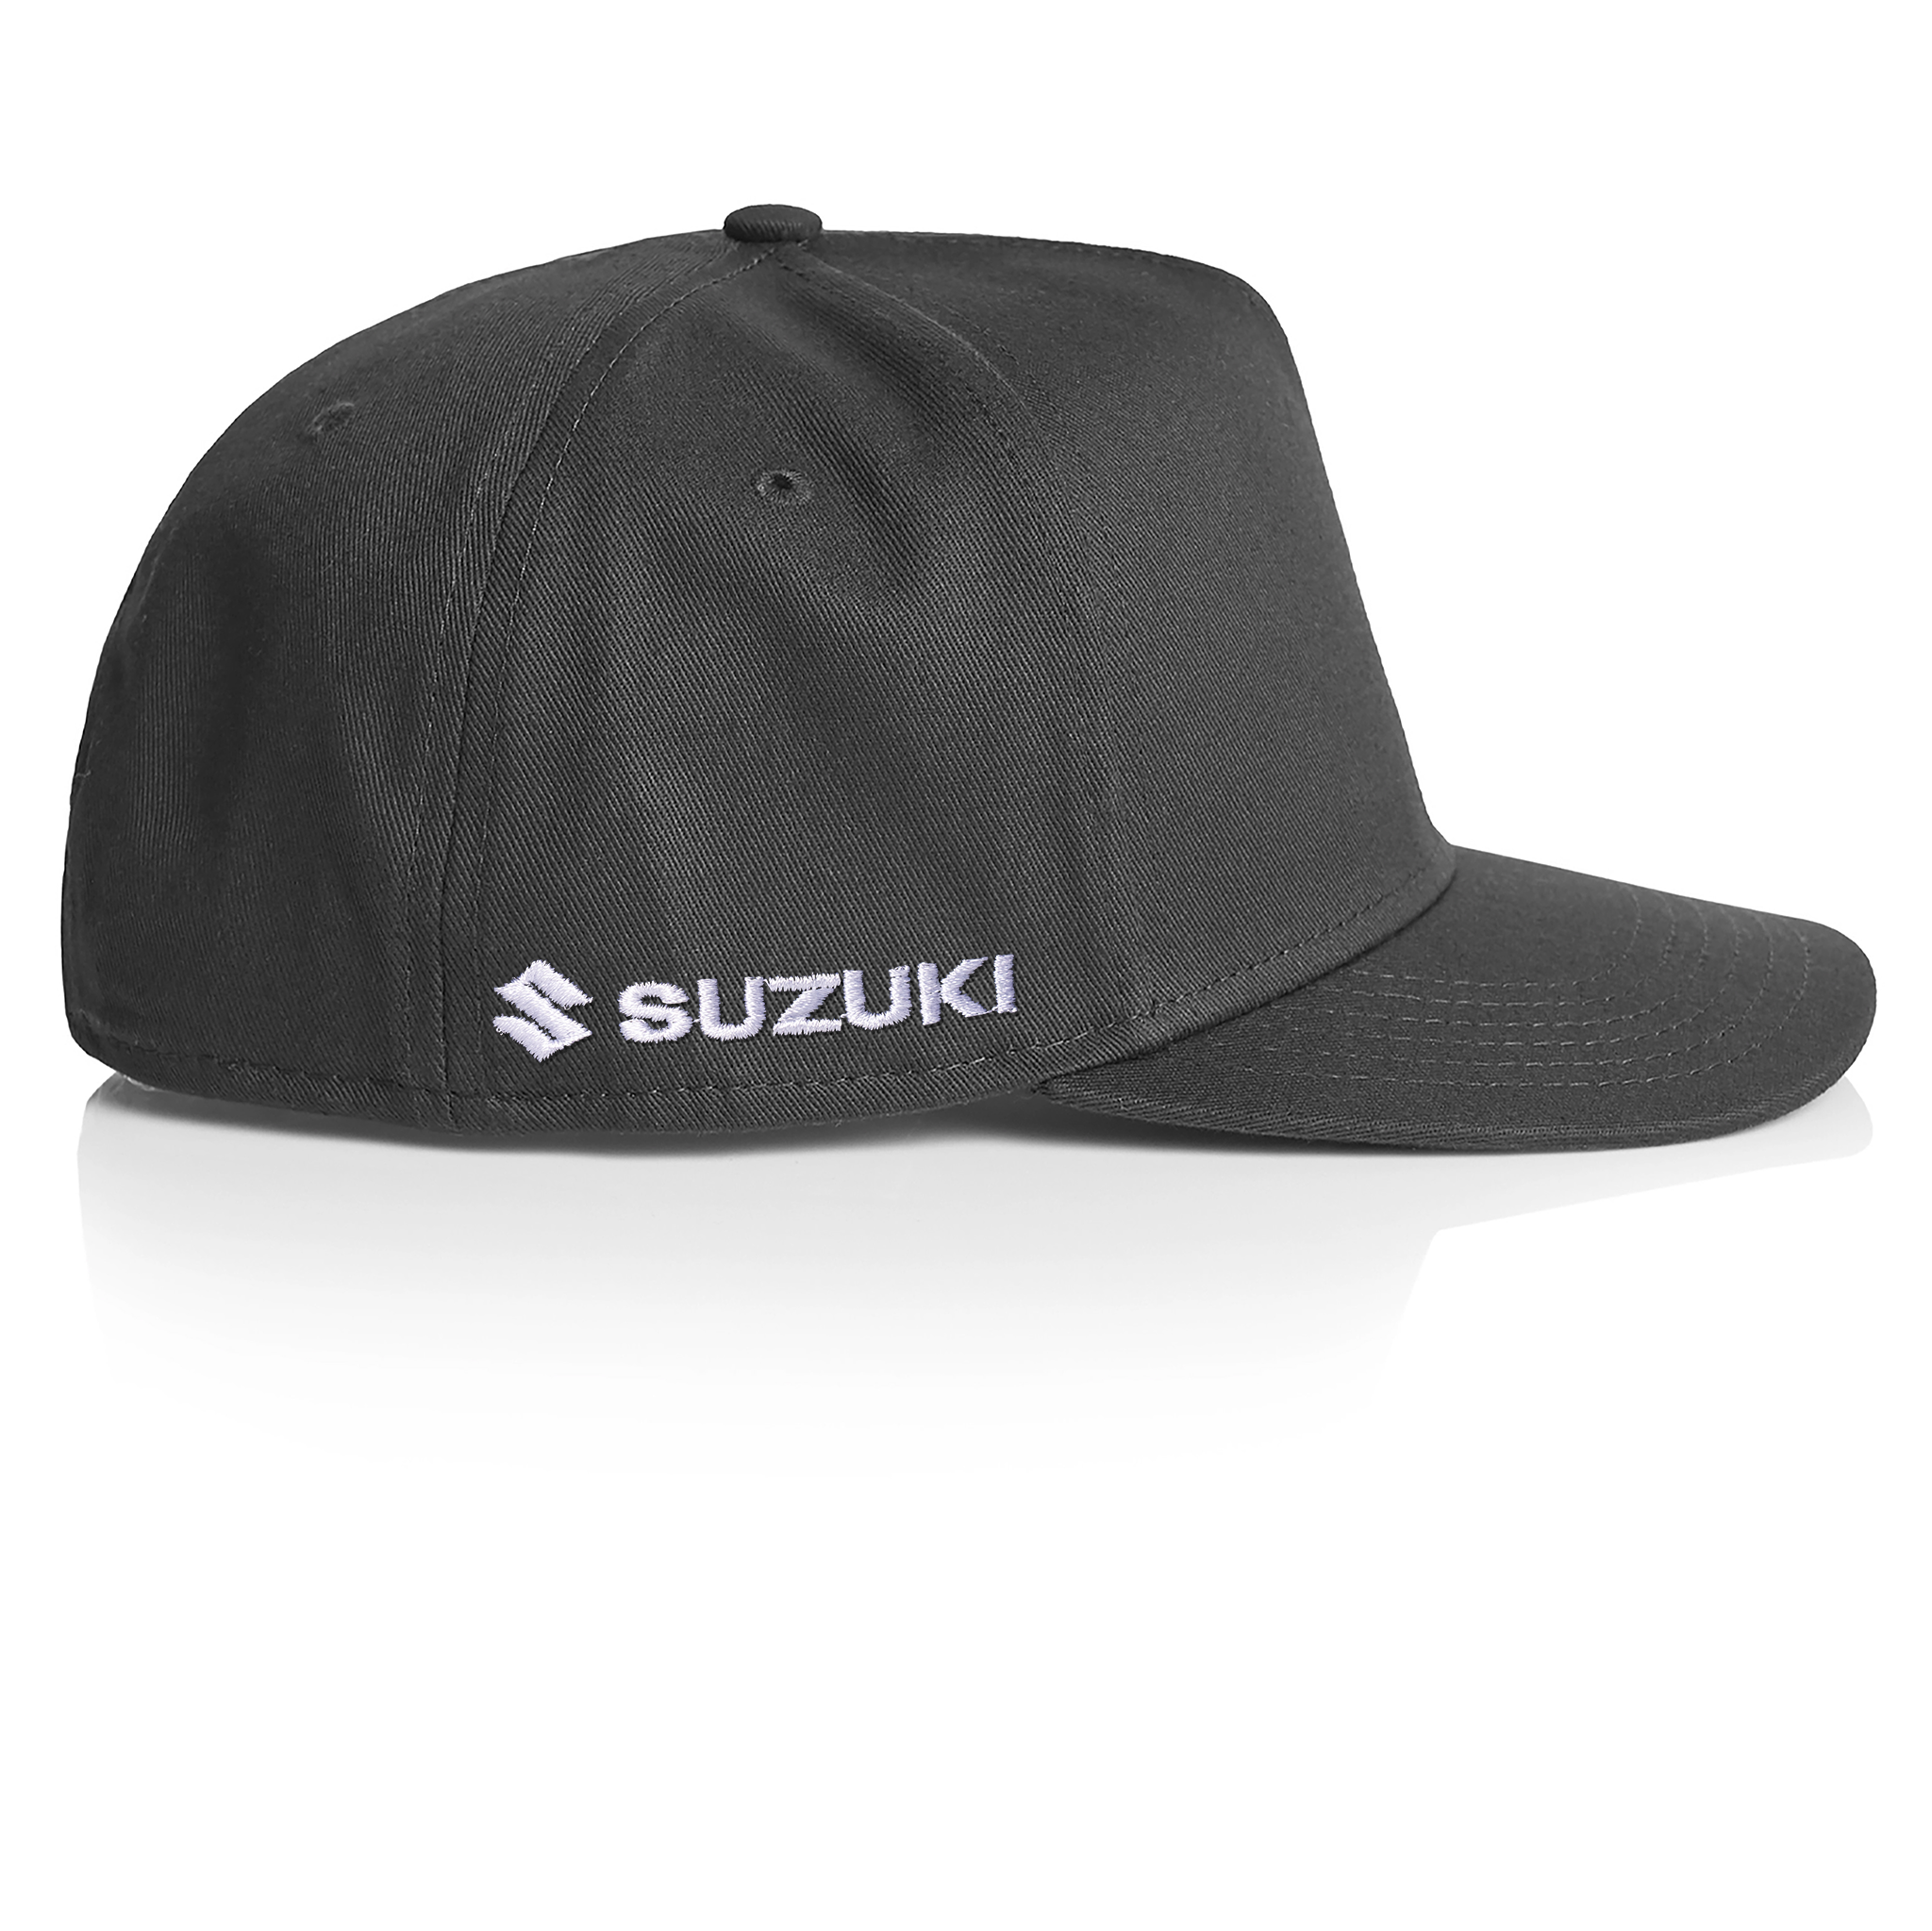 Suzuki Snapback Cap